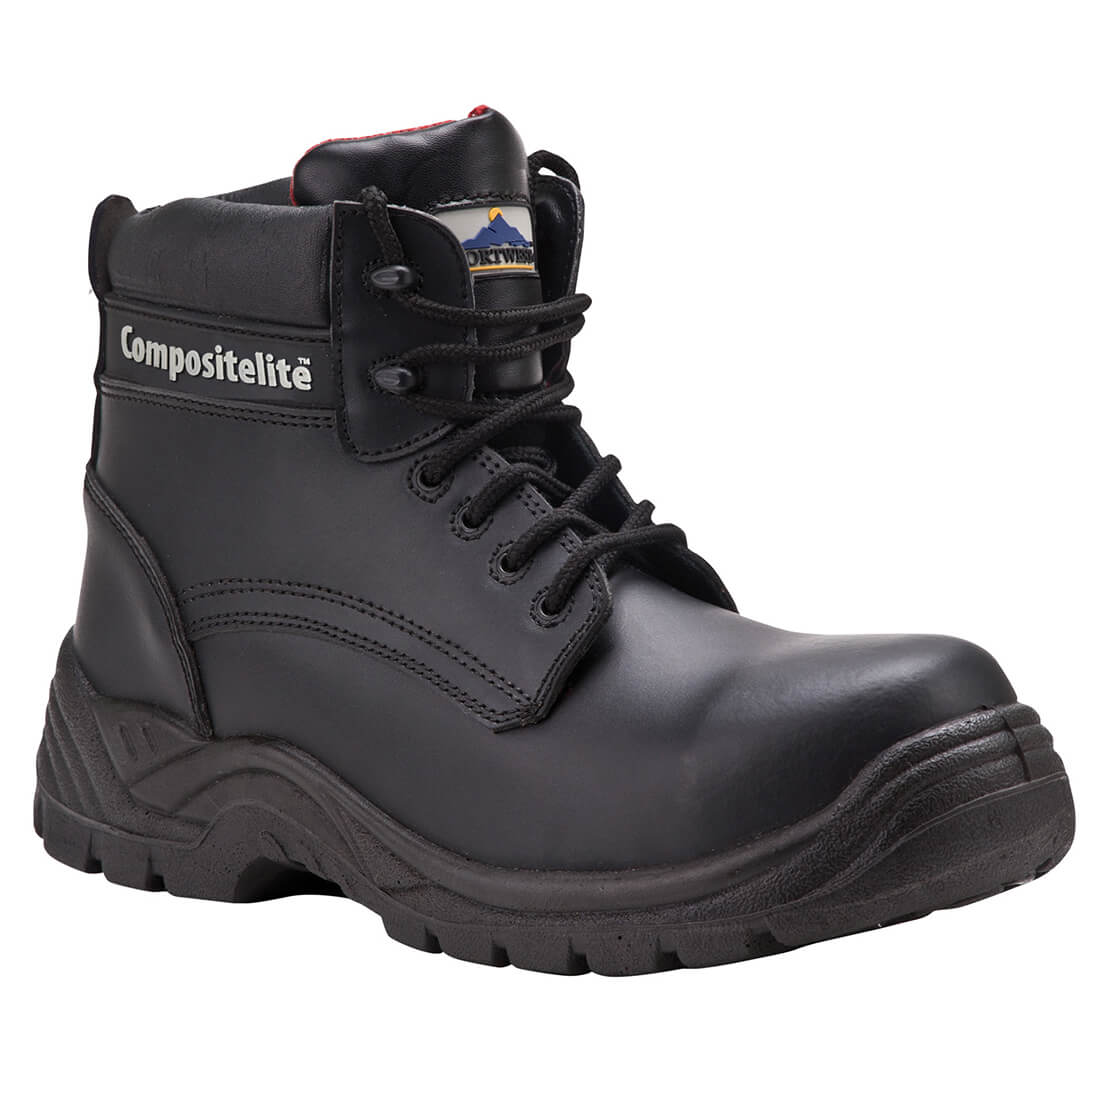 Portwest Compositelite Thor Safety Boots Black Size 10